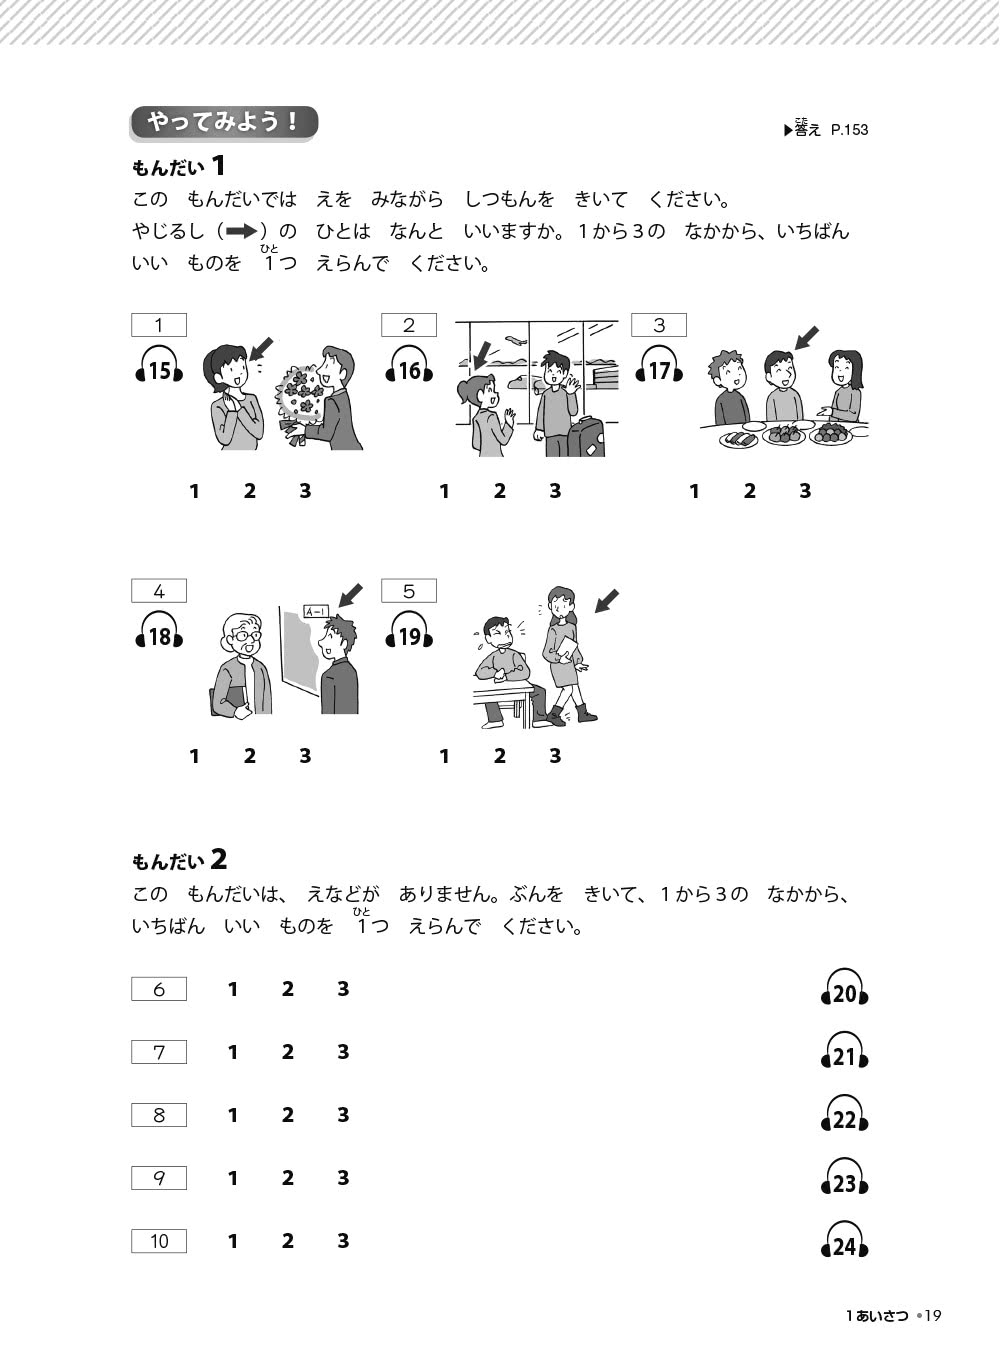 TRY！日本語N5達陣：從日檢文法展開全方位學習（MP3免費下載）